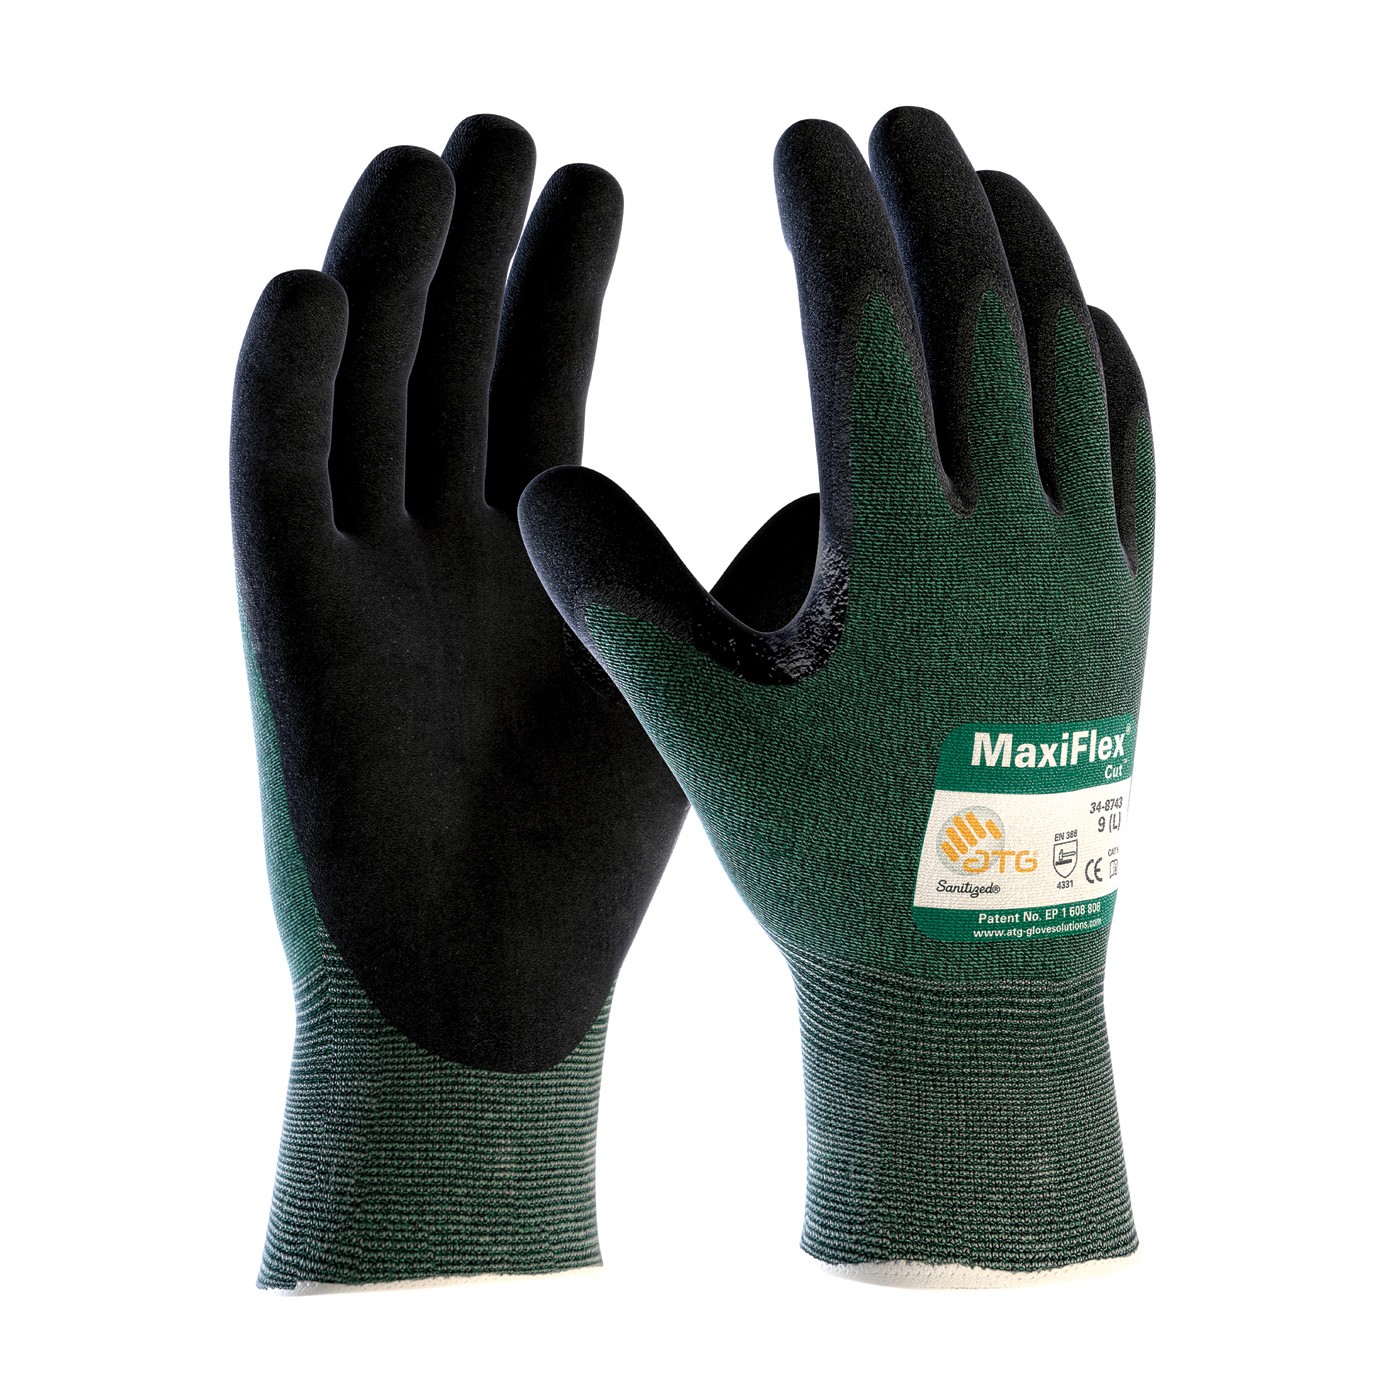 MaxiFlex® Cut™ Seamless Knit Engineered Yarn Glove with Premium Nitrile Coated MicroFoam Grip on Palm & Fingers (#34-8743)